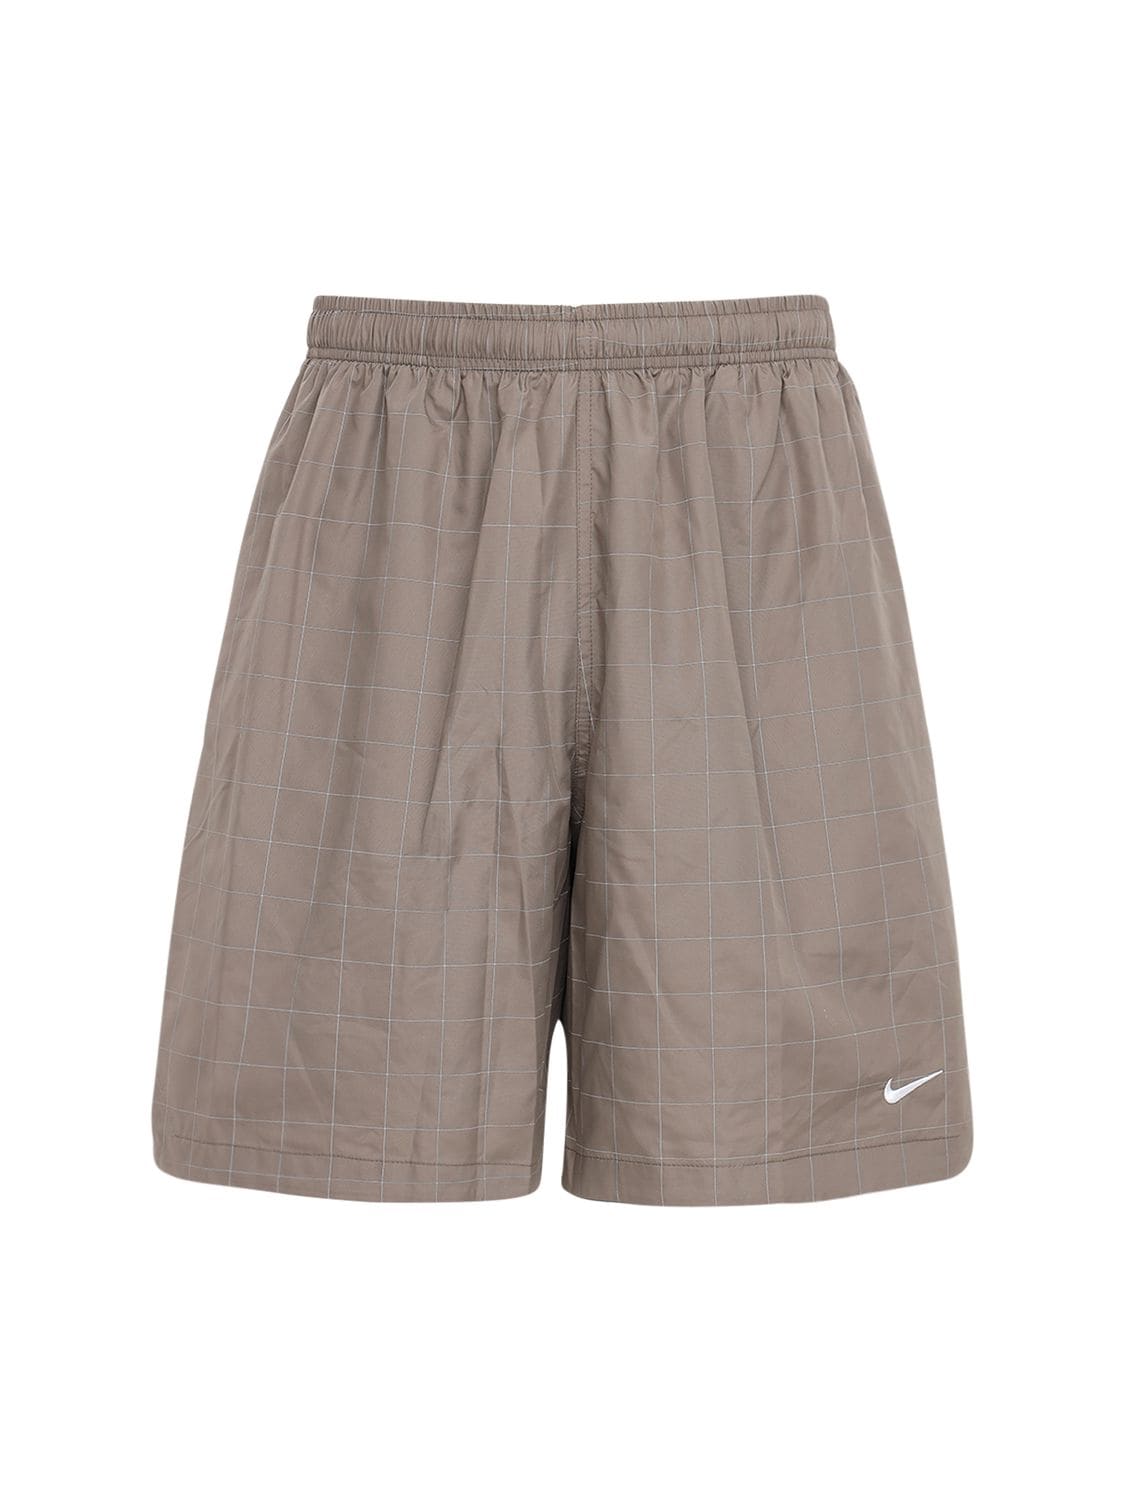 Nike Lab Nrg Flash Shorts In Olive Grey